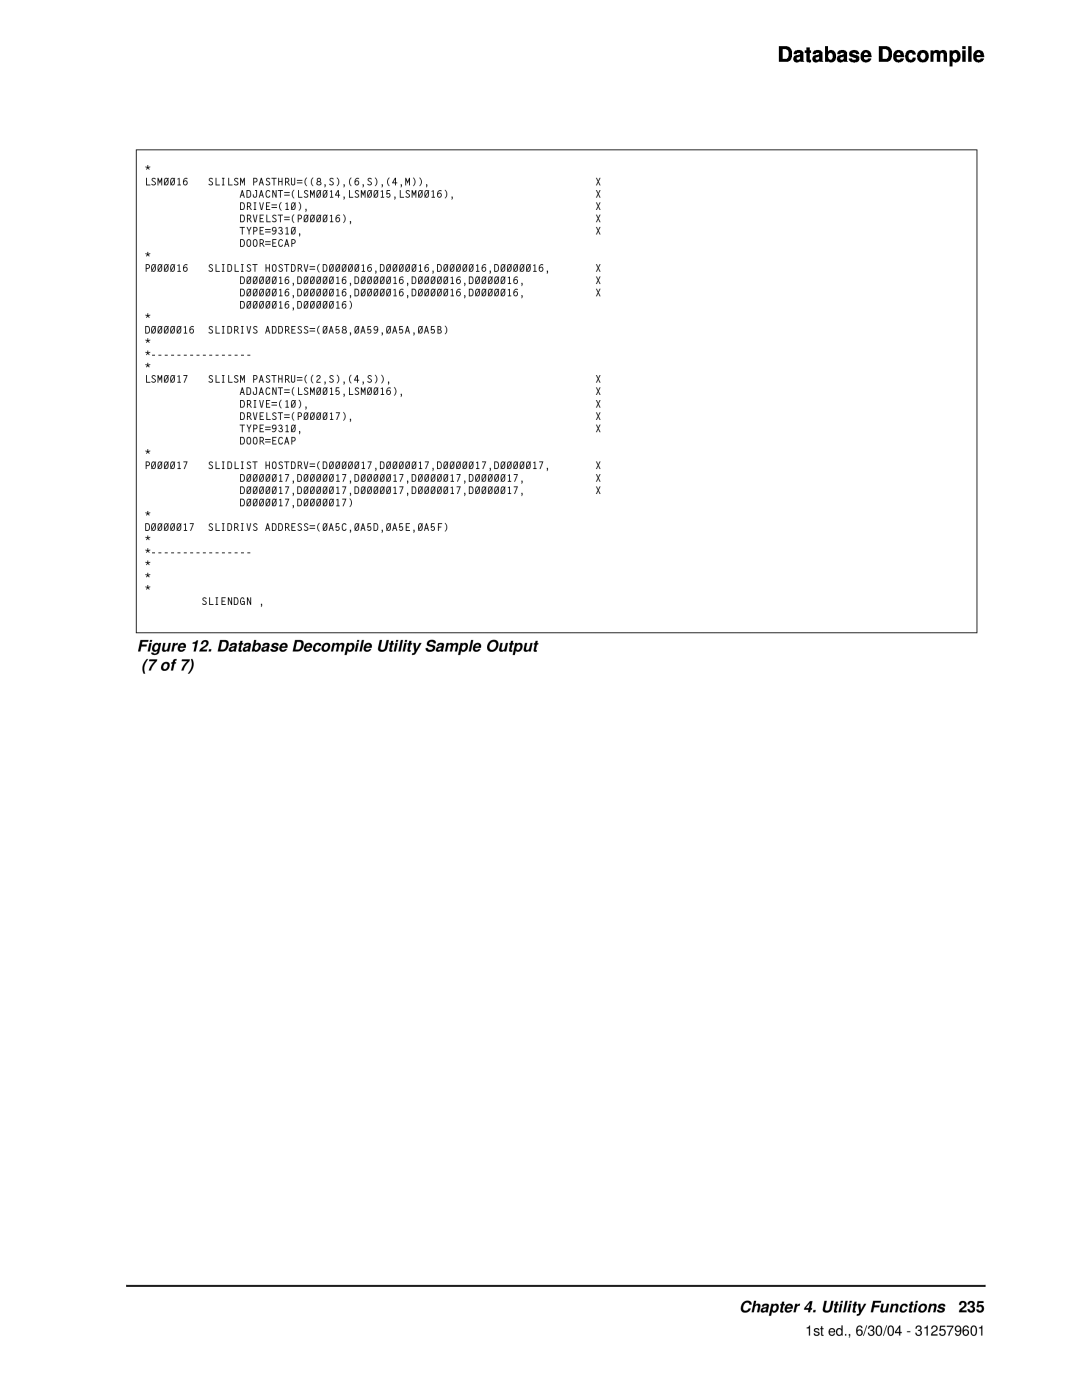 StorageTek manual Database Decompile, Utility Functions, 1st ed., 6/30/04 